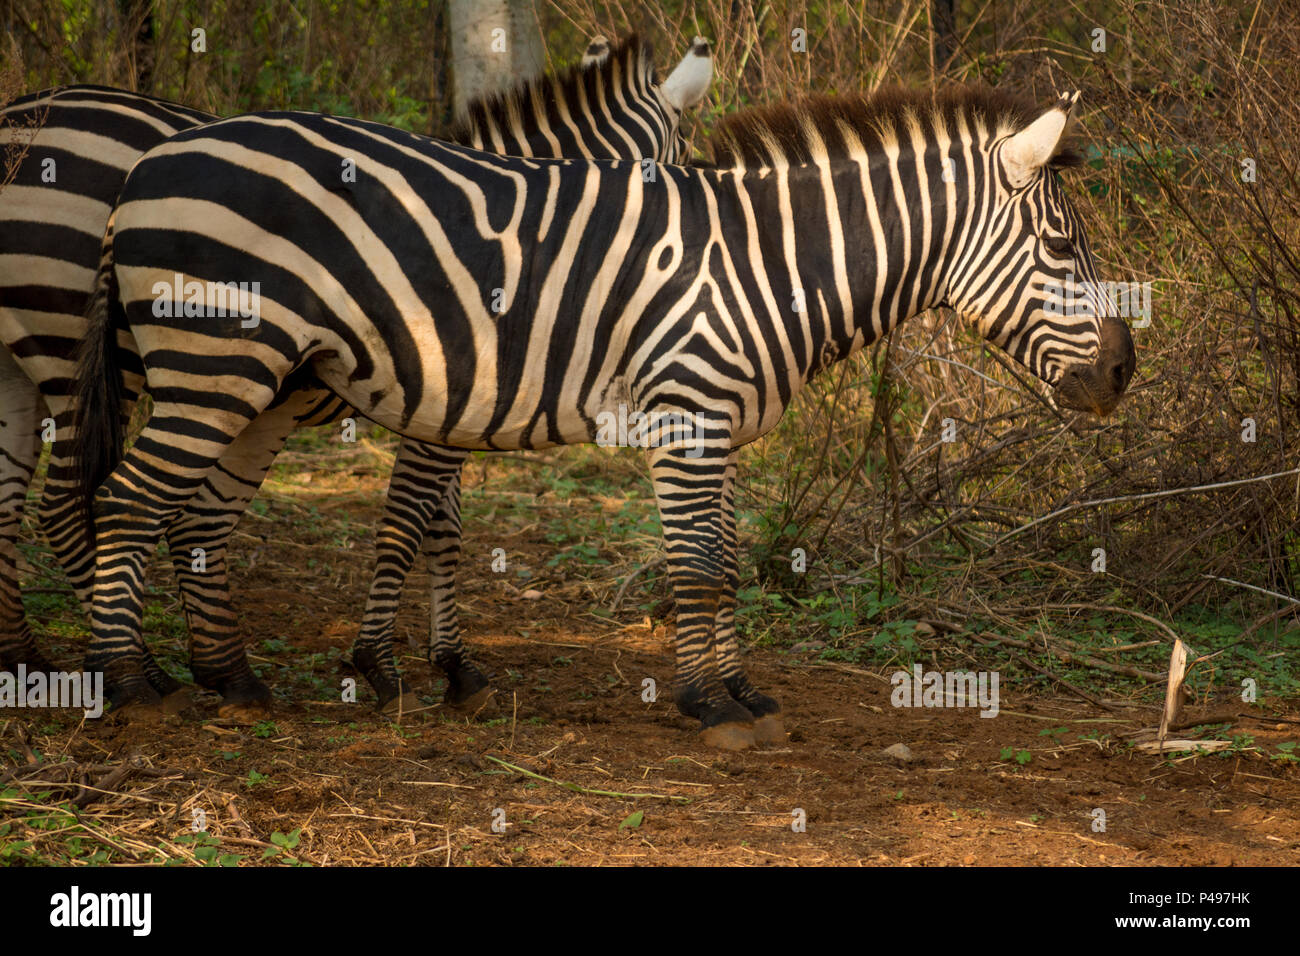 Zebras grazing in captivity, Bangalore India Stock Photo